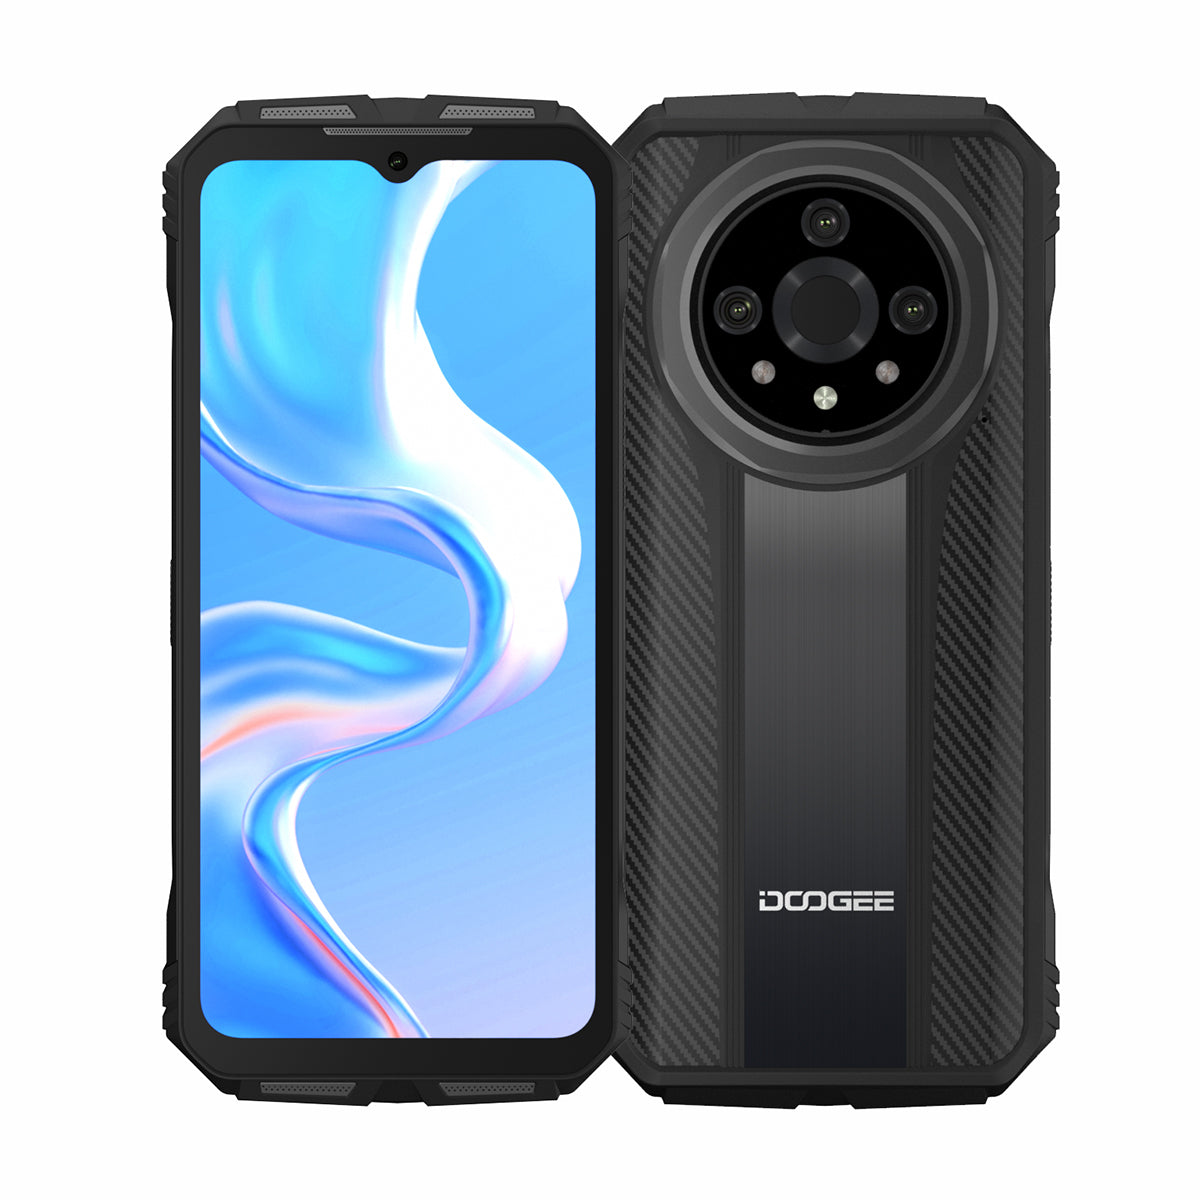 Doogee V31GT 頑丈な携帯電話 24MP ナイトビジョン